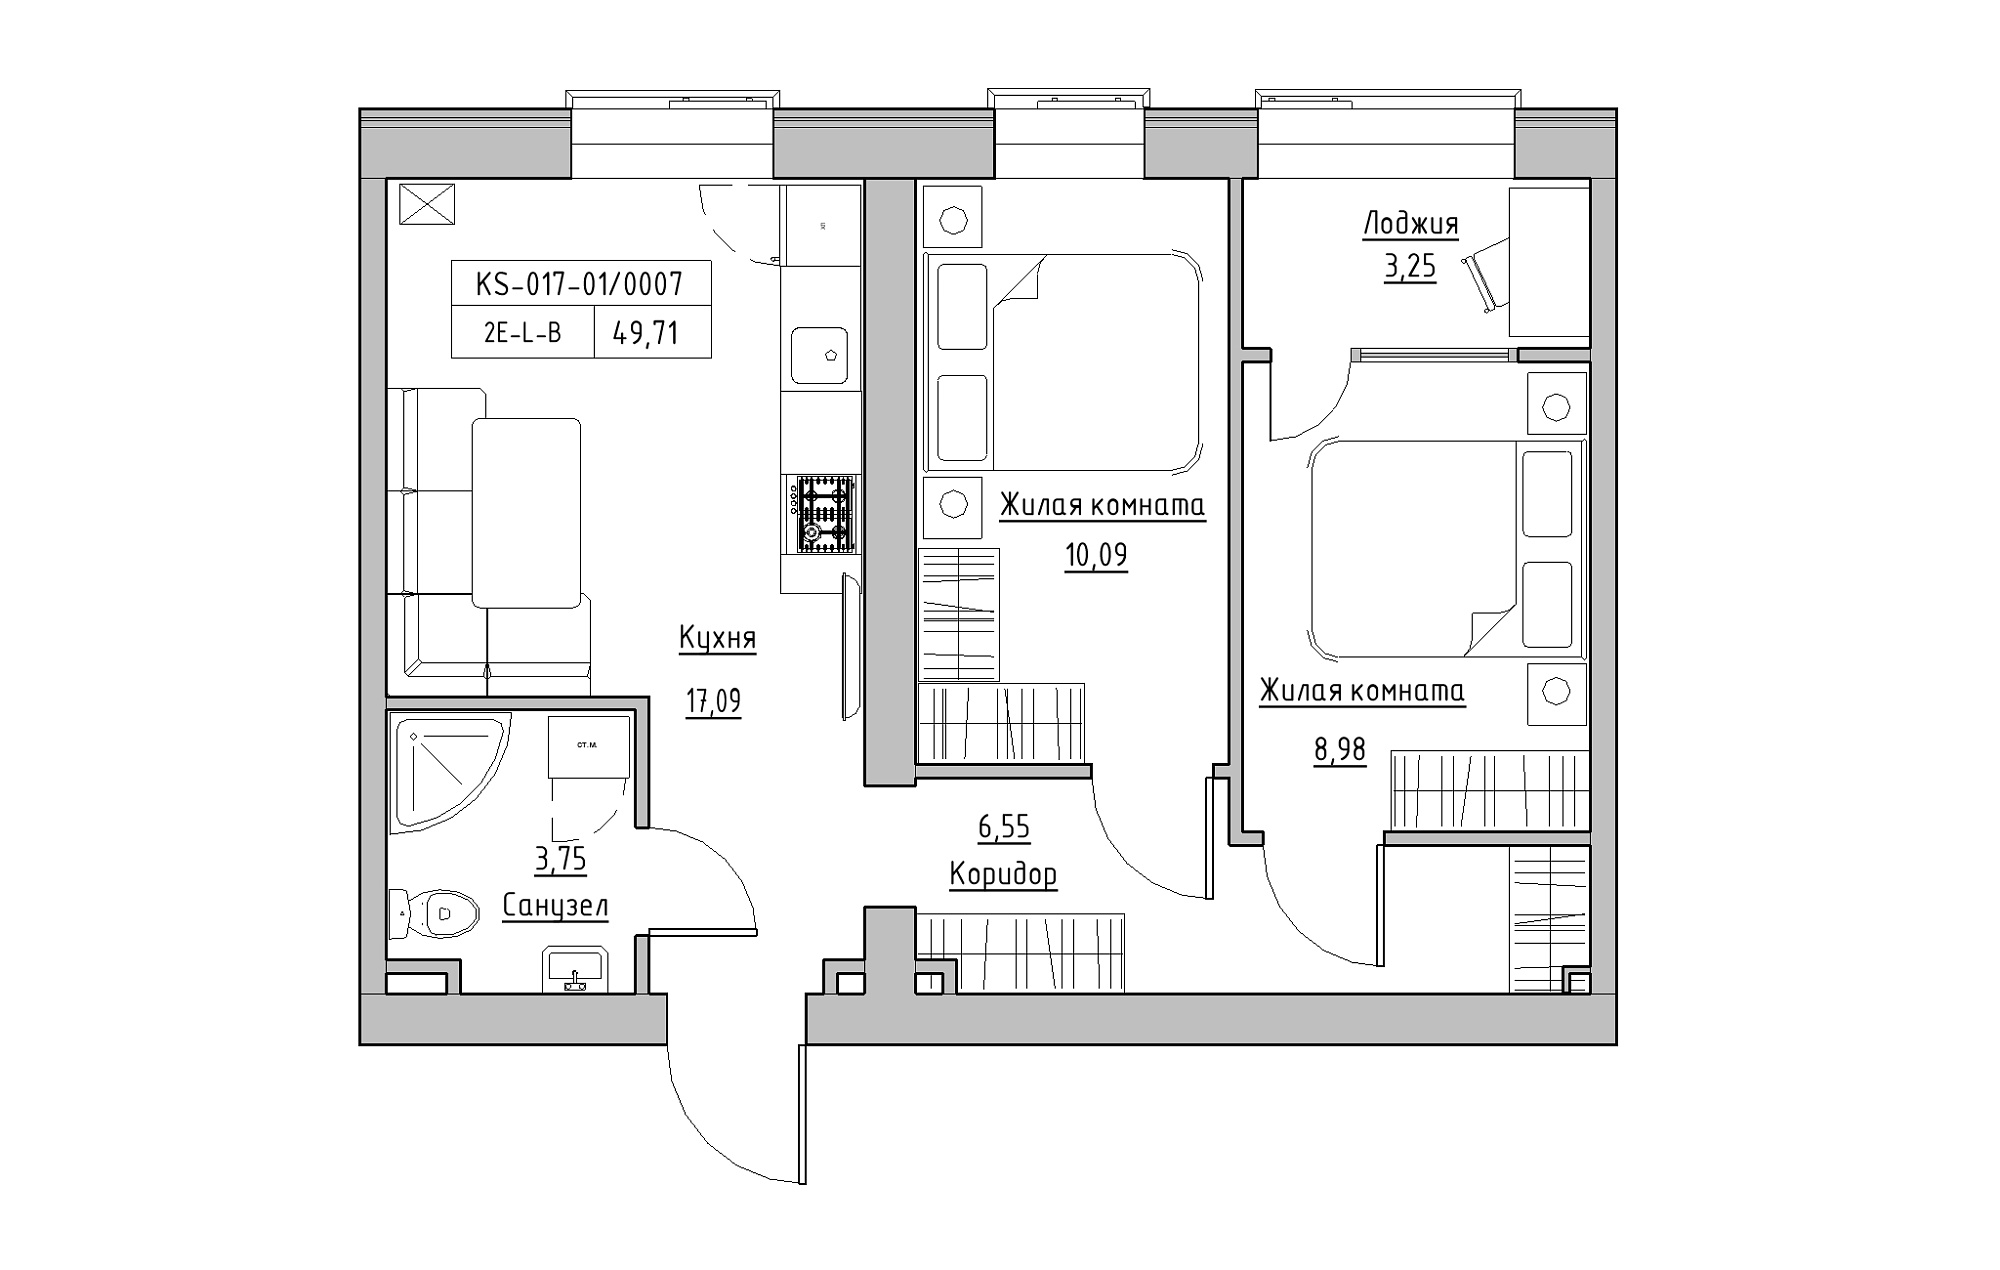 Planning 2-rm flats area 49.71m2, KS-017-01/0007.